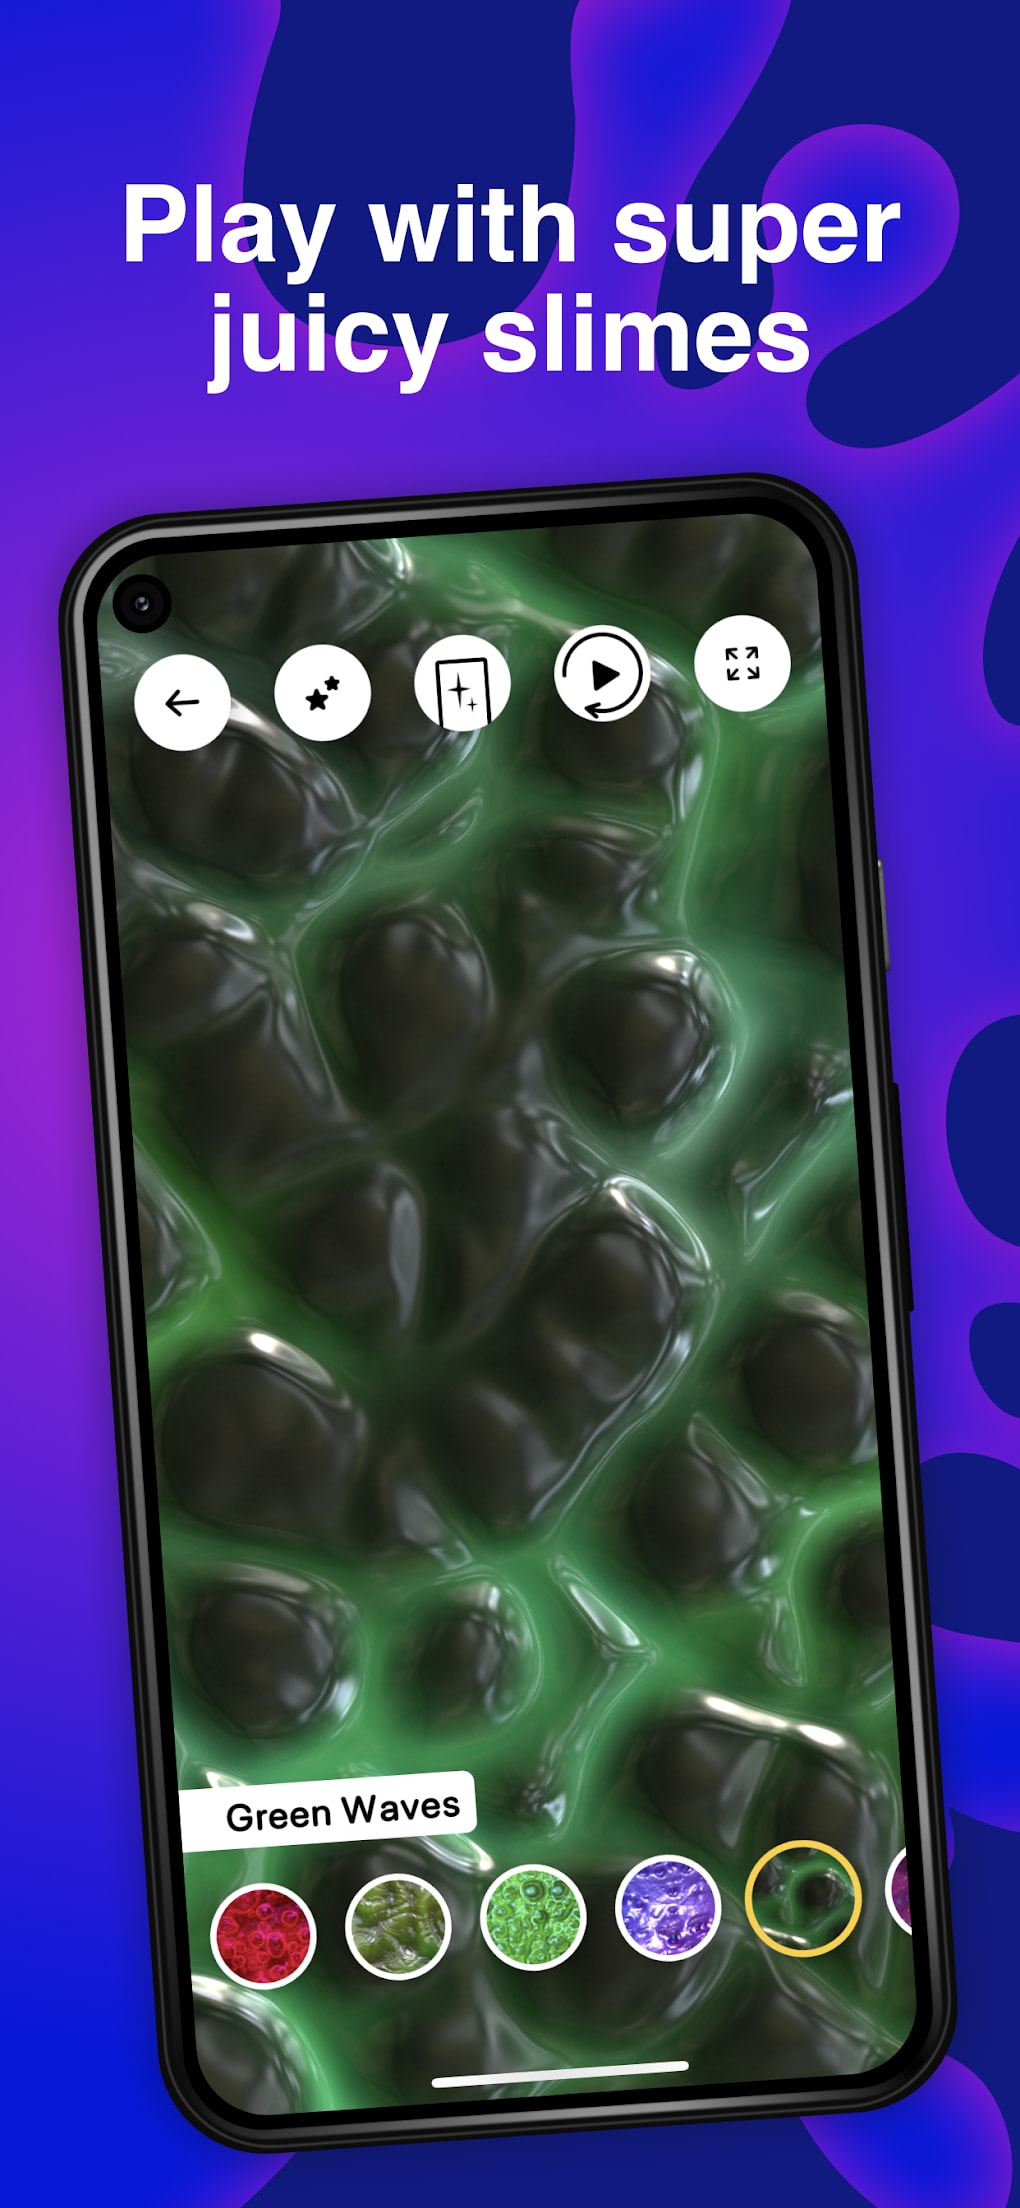 Asmr Slime Simulator Games – Apps on Google Play